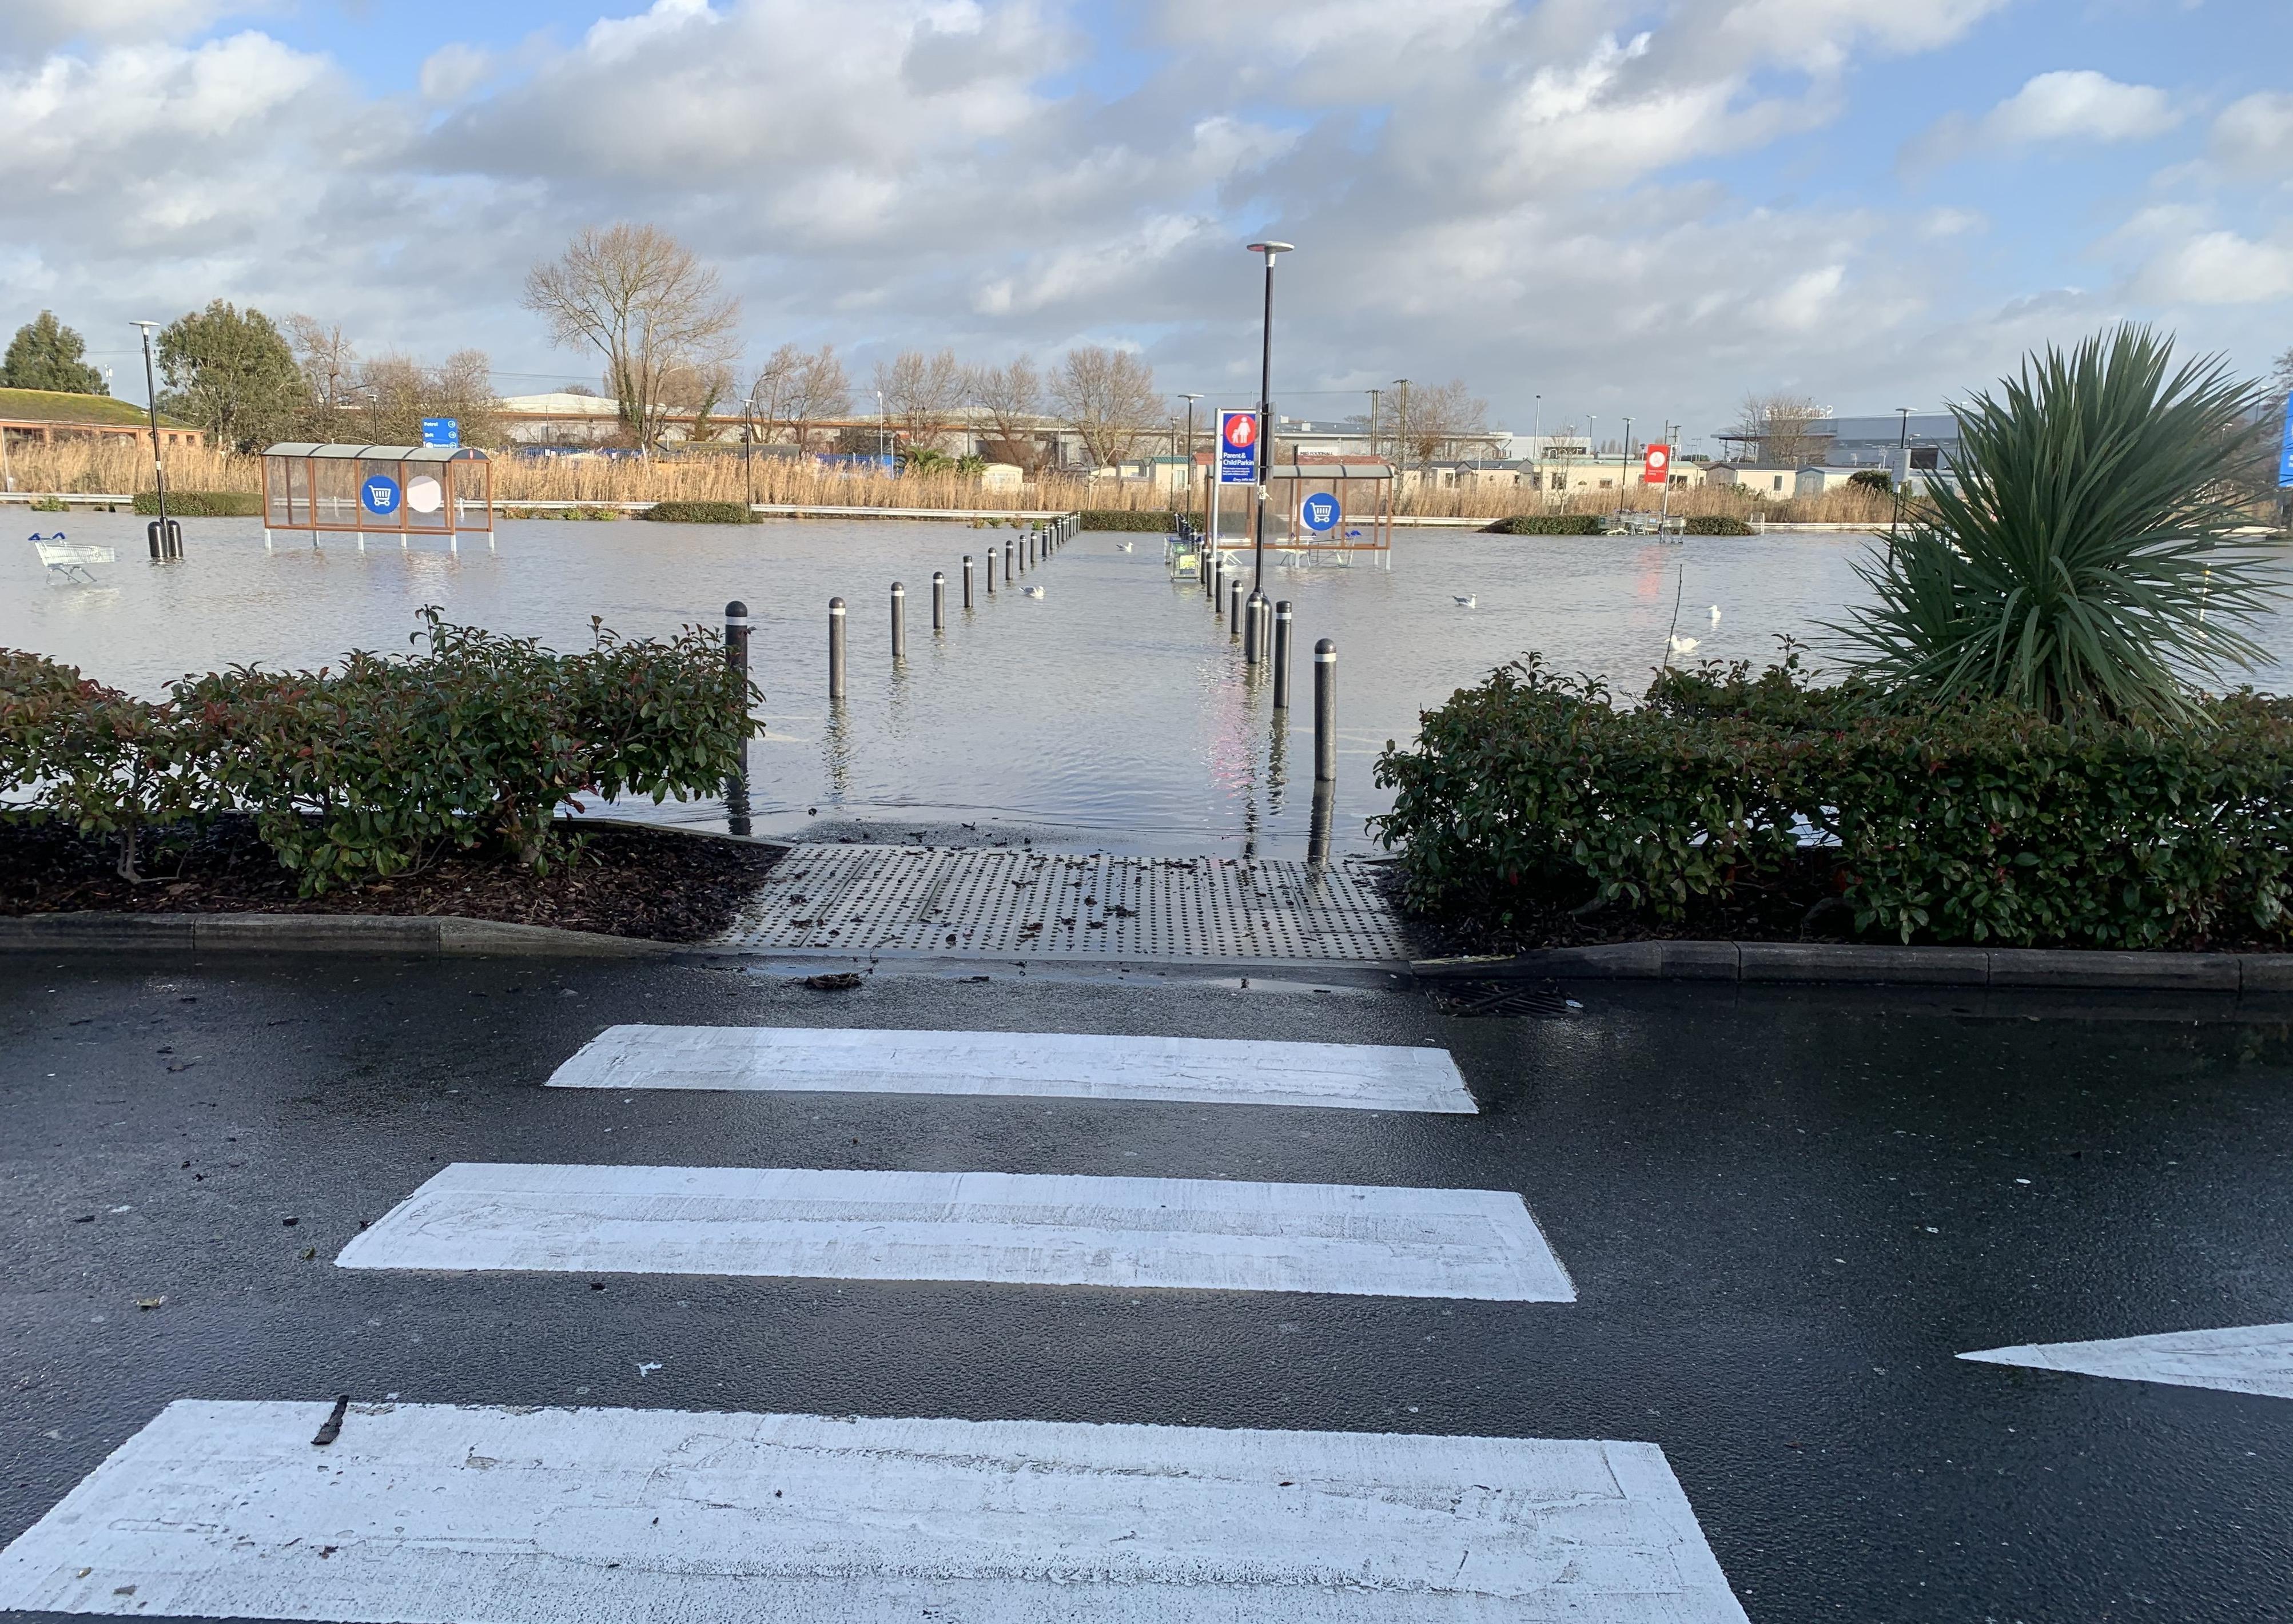 Tesco’s car park in Bognor Regis has been left under water after more flooding over the weekend. SUS-191223-143550001